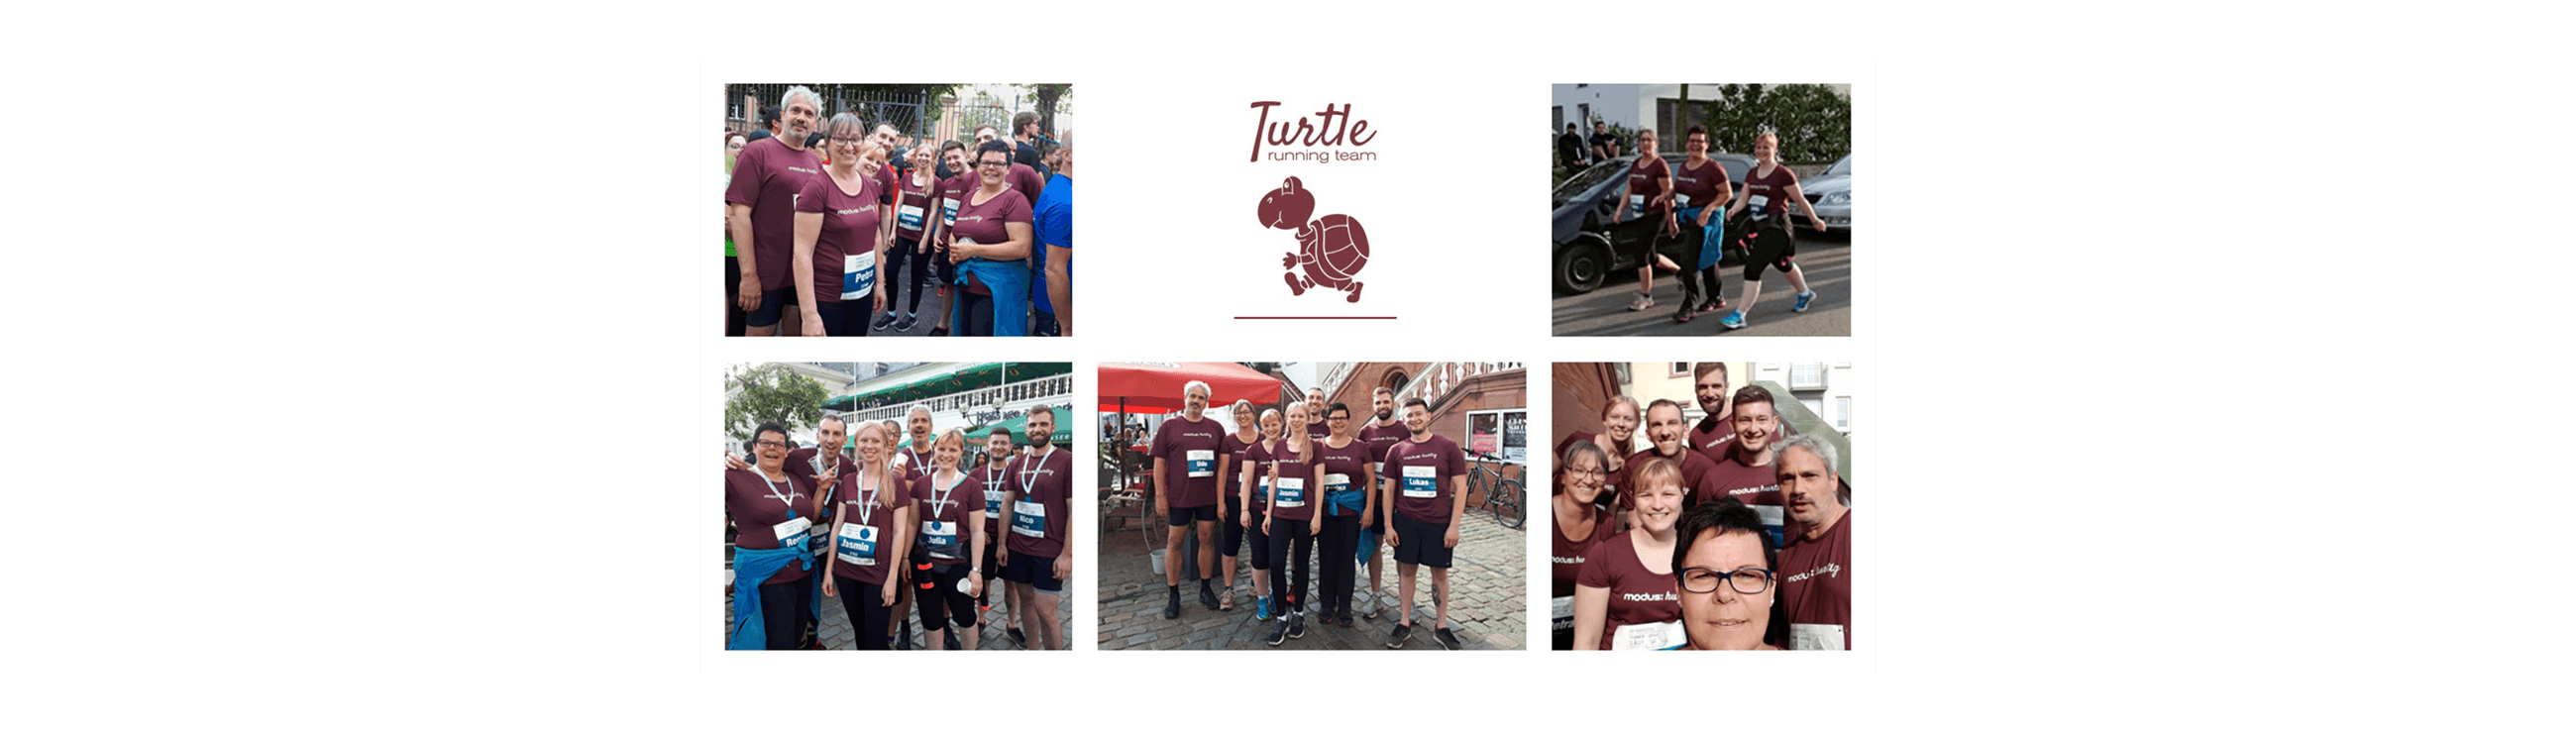 Turtle Running Team